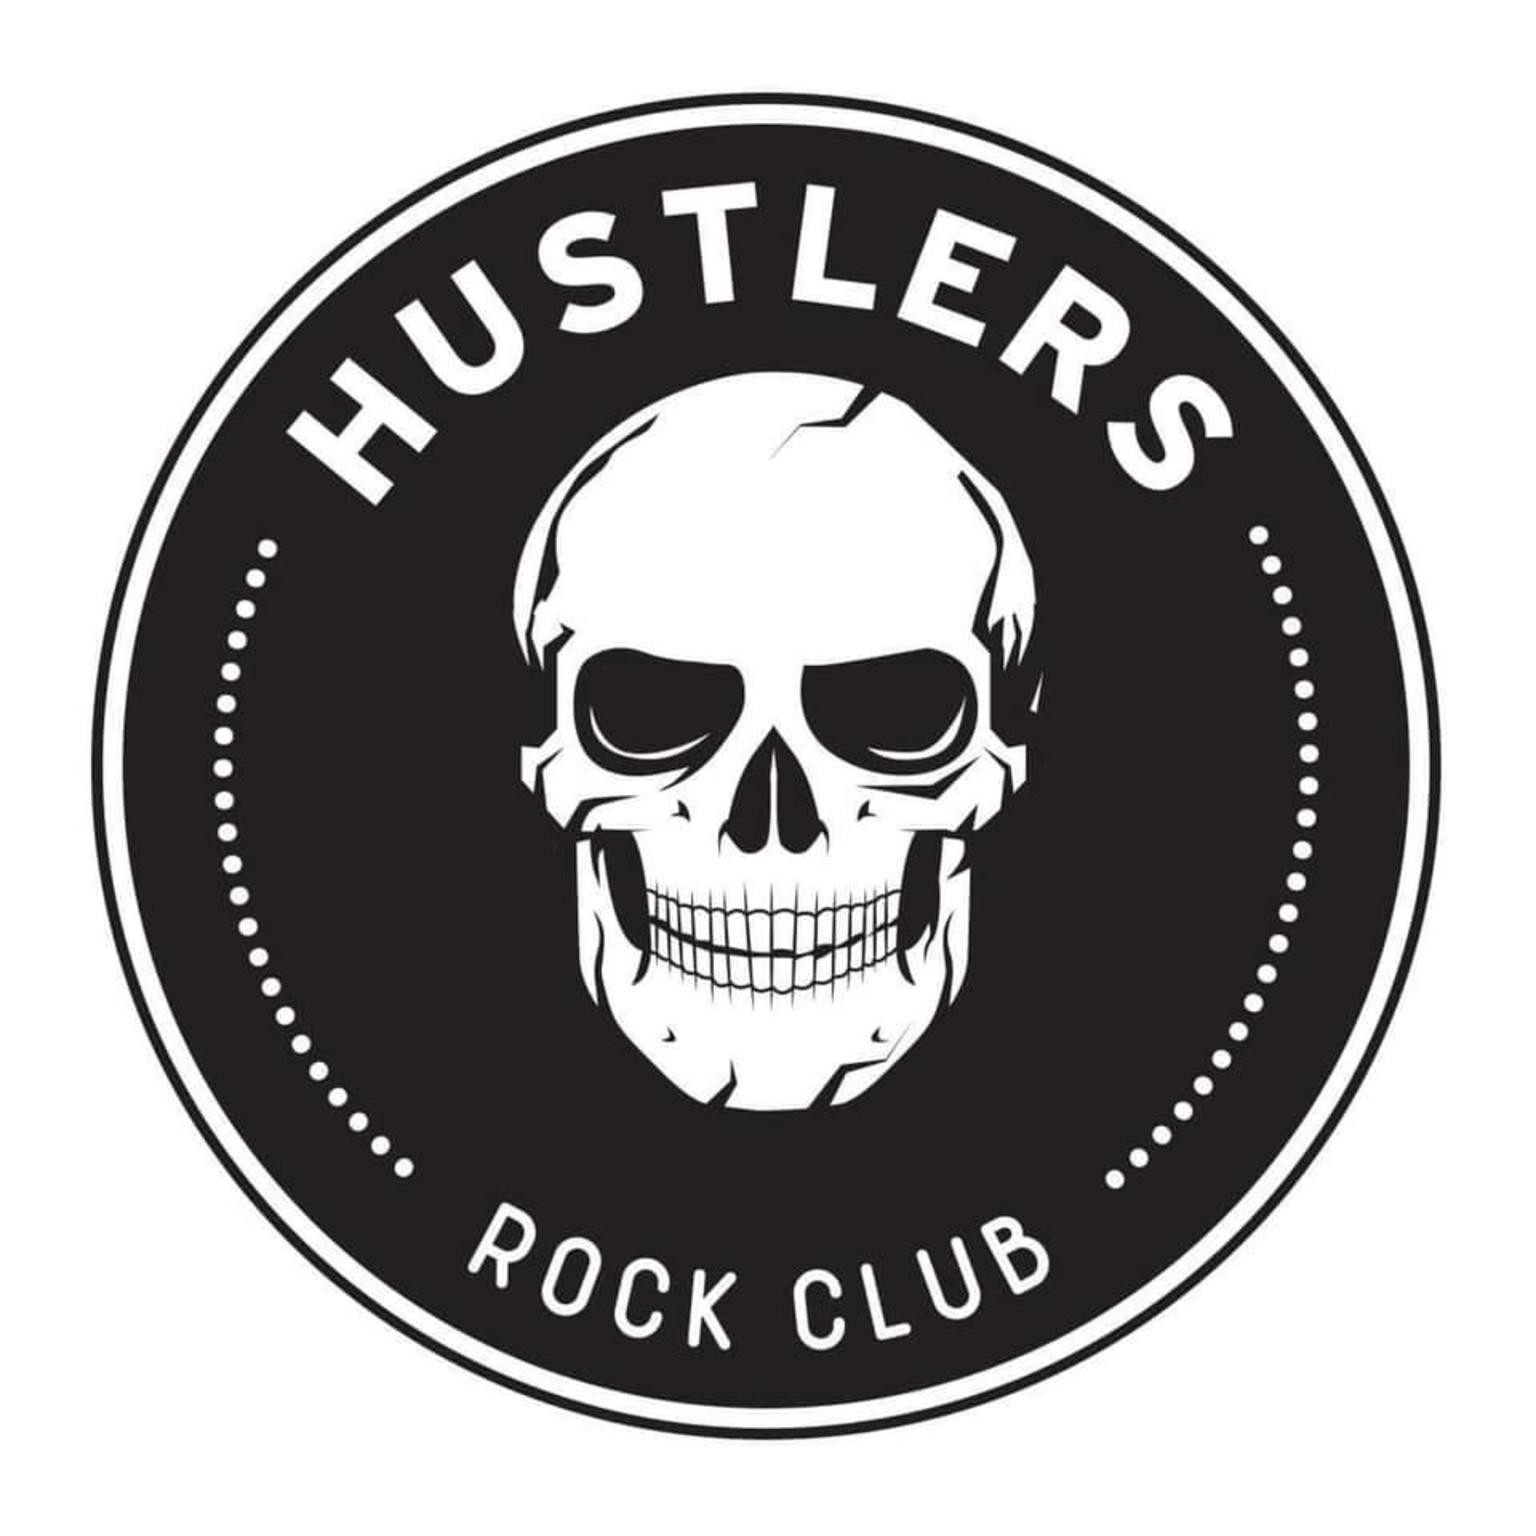 Hustlers Rock Club